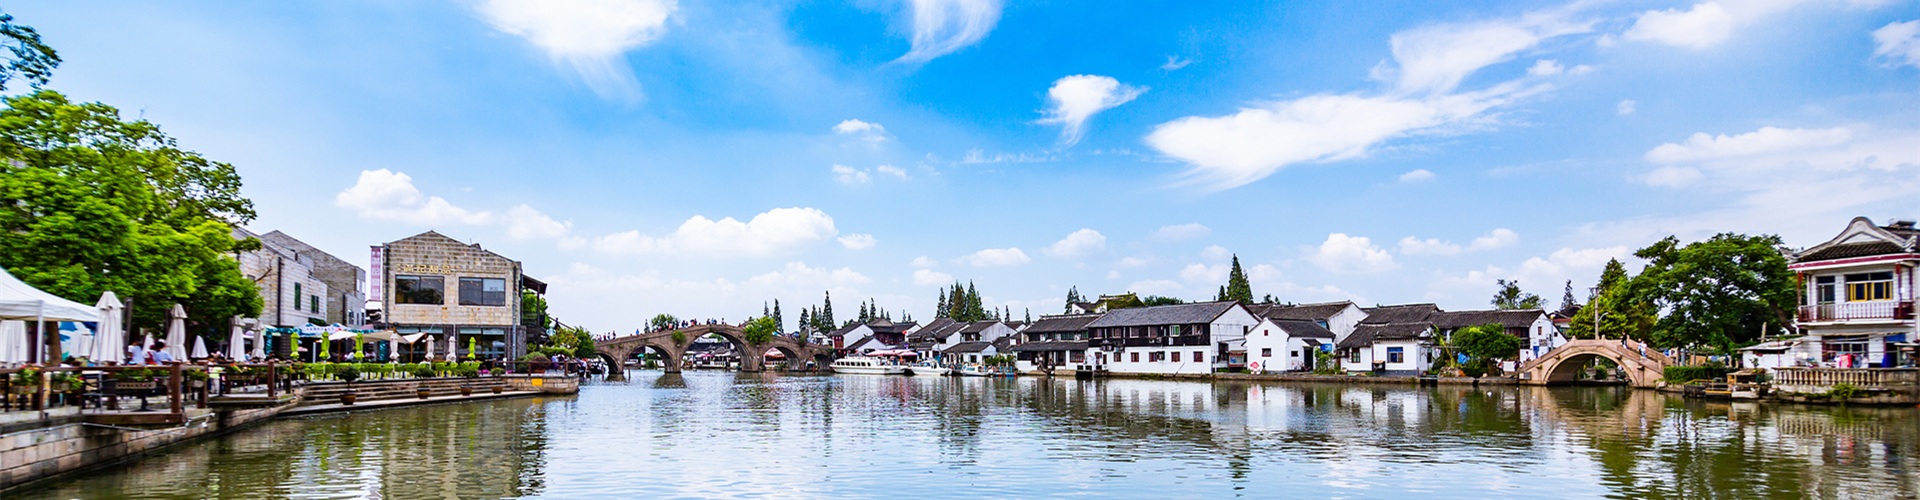 Zhujiajiao Water Town - an Exquisite Pastoral Ancient Chinese Town